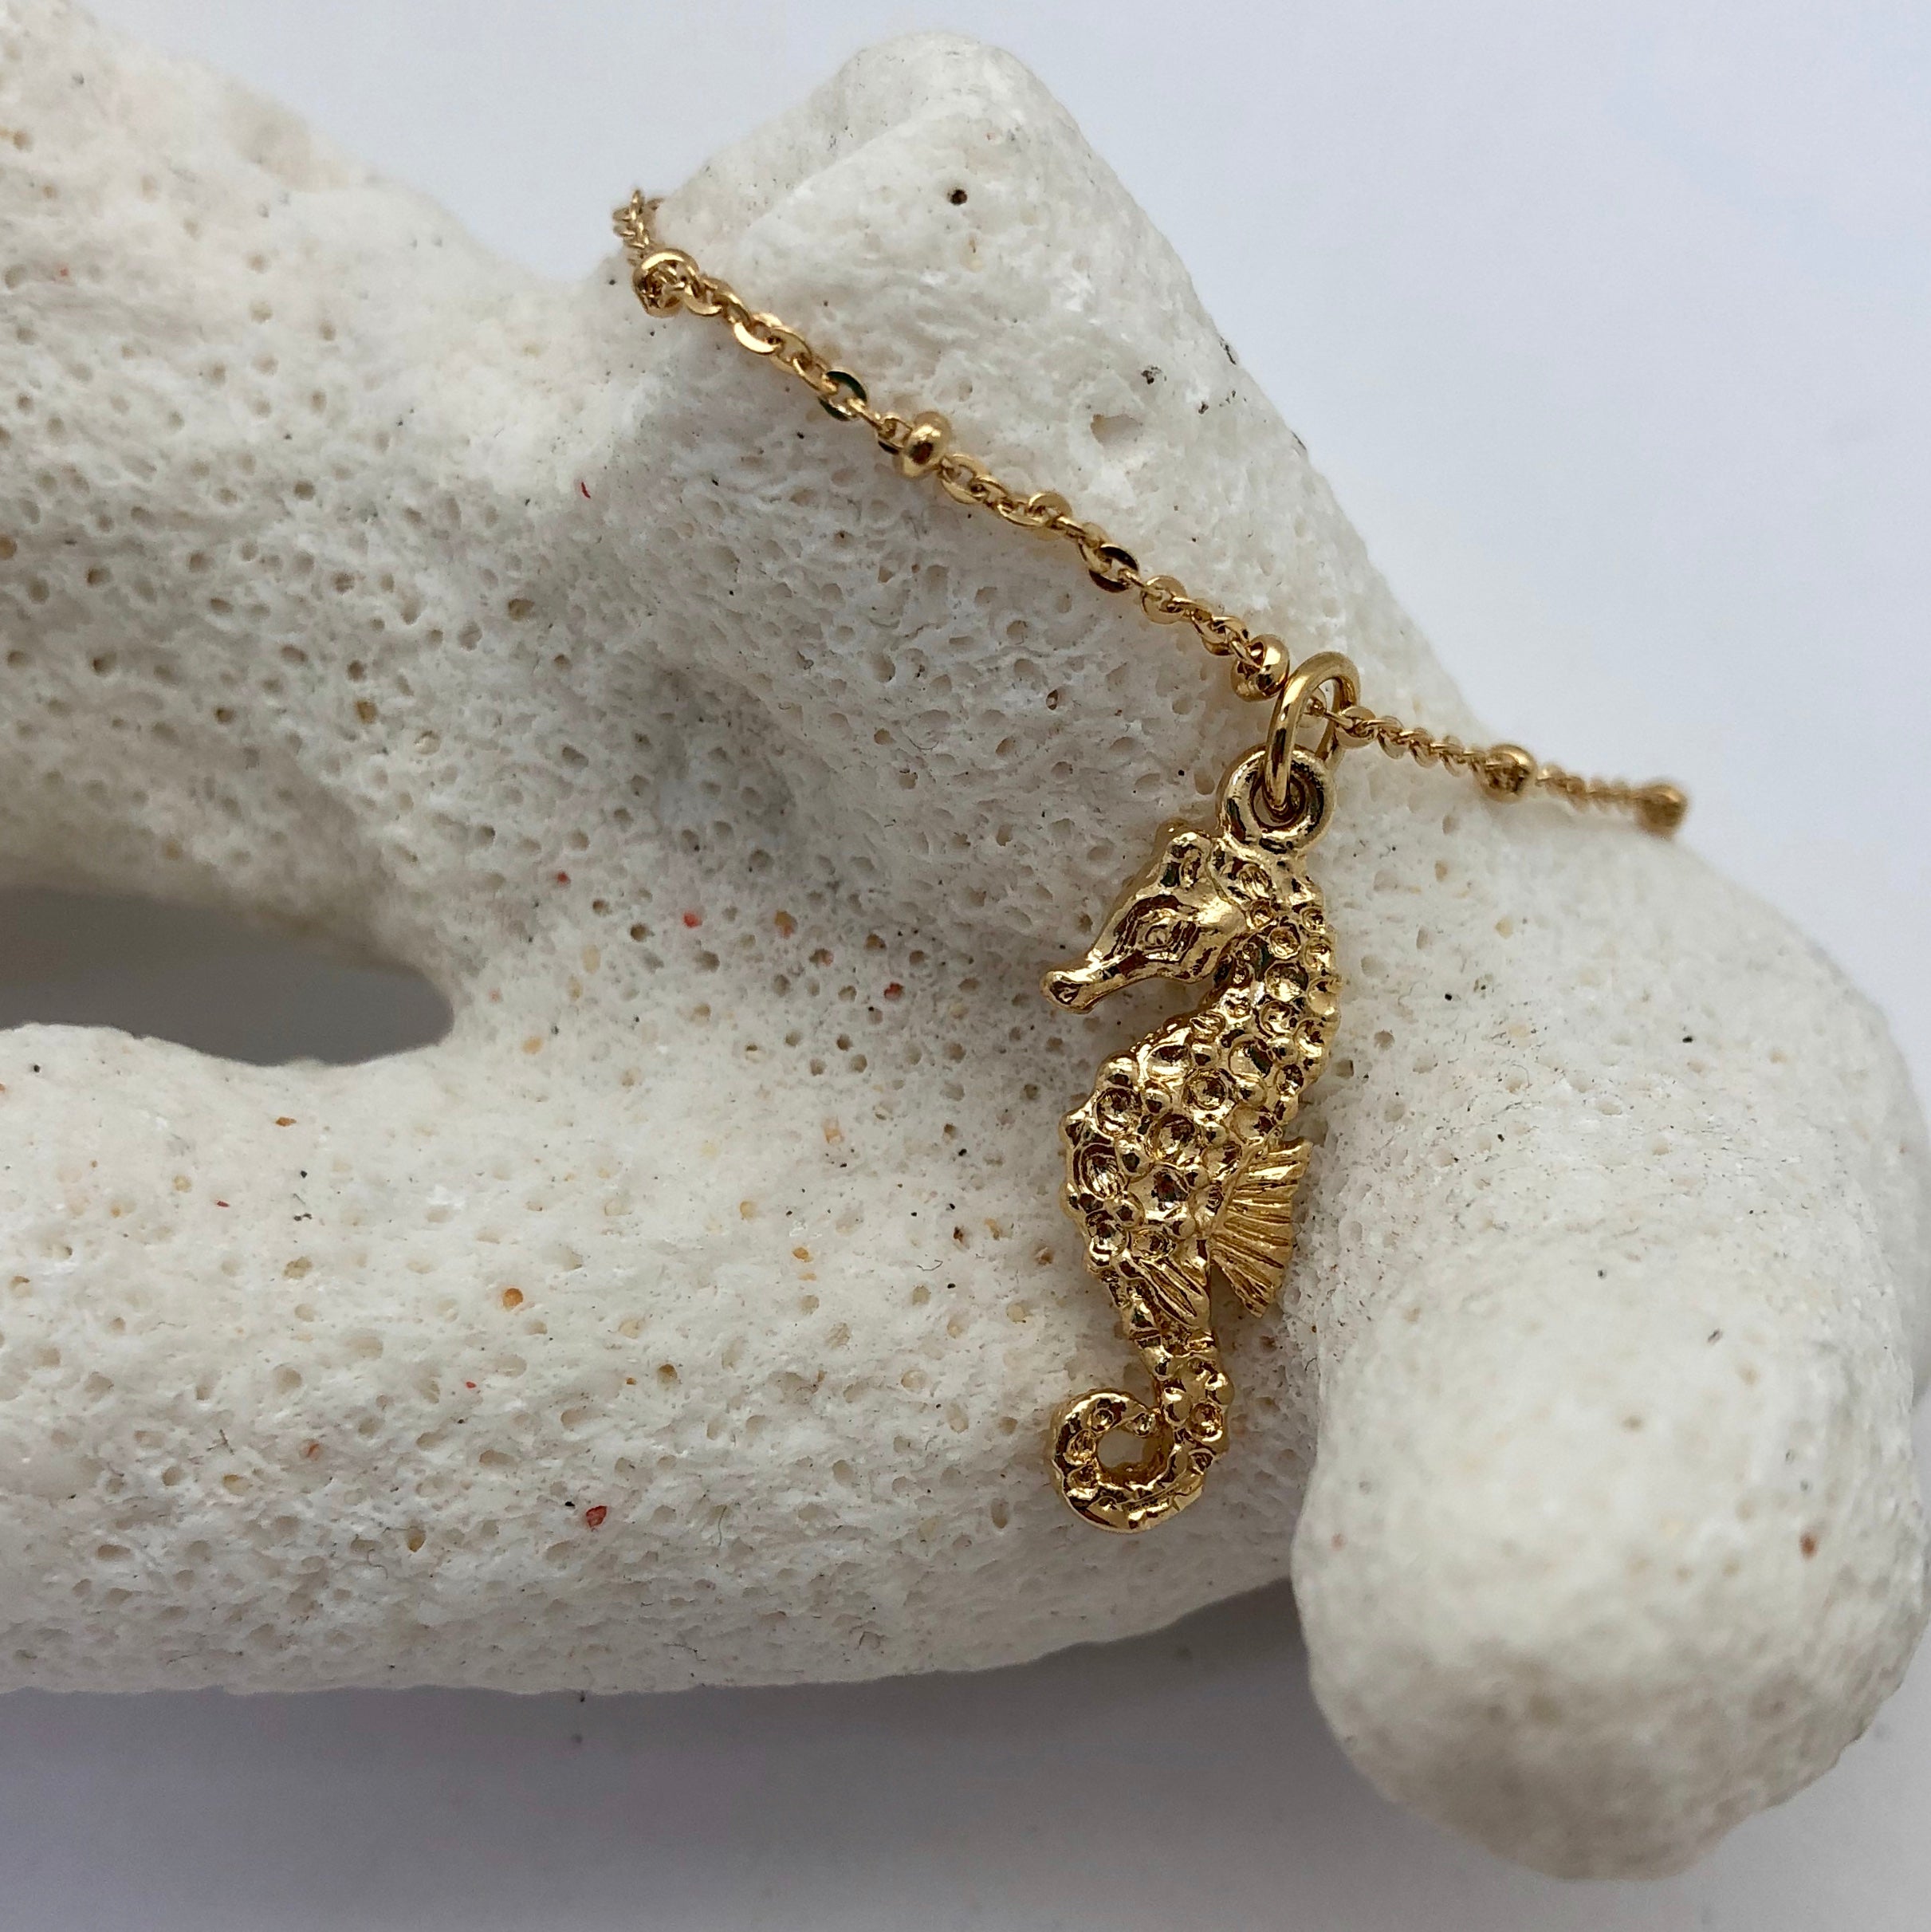 Mini Seahorse Charm - Mirabelle Jewellery